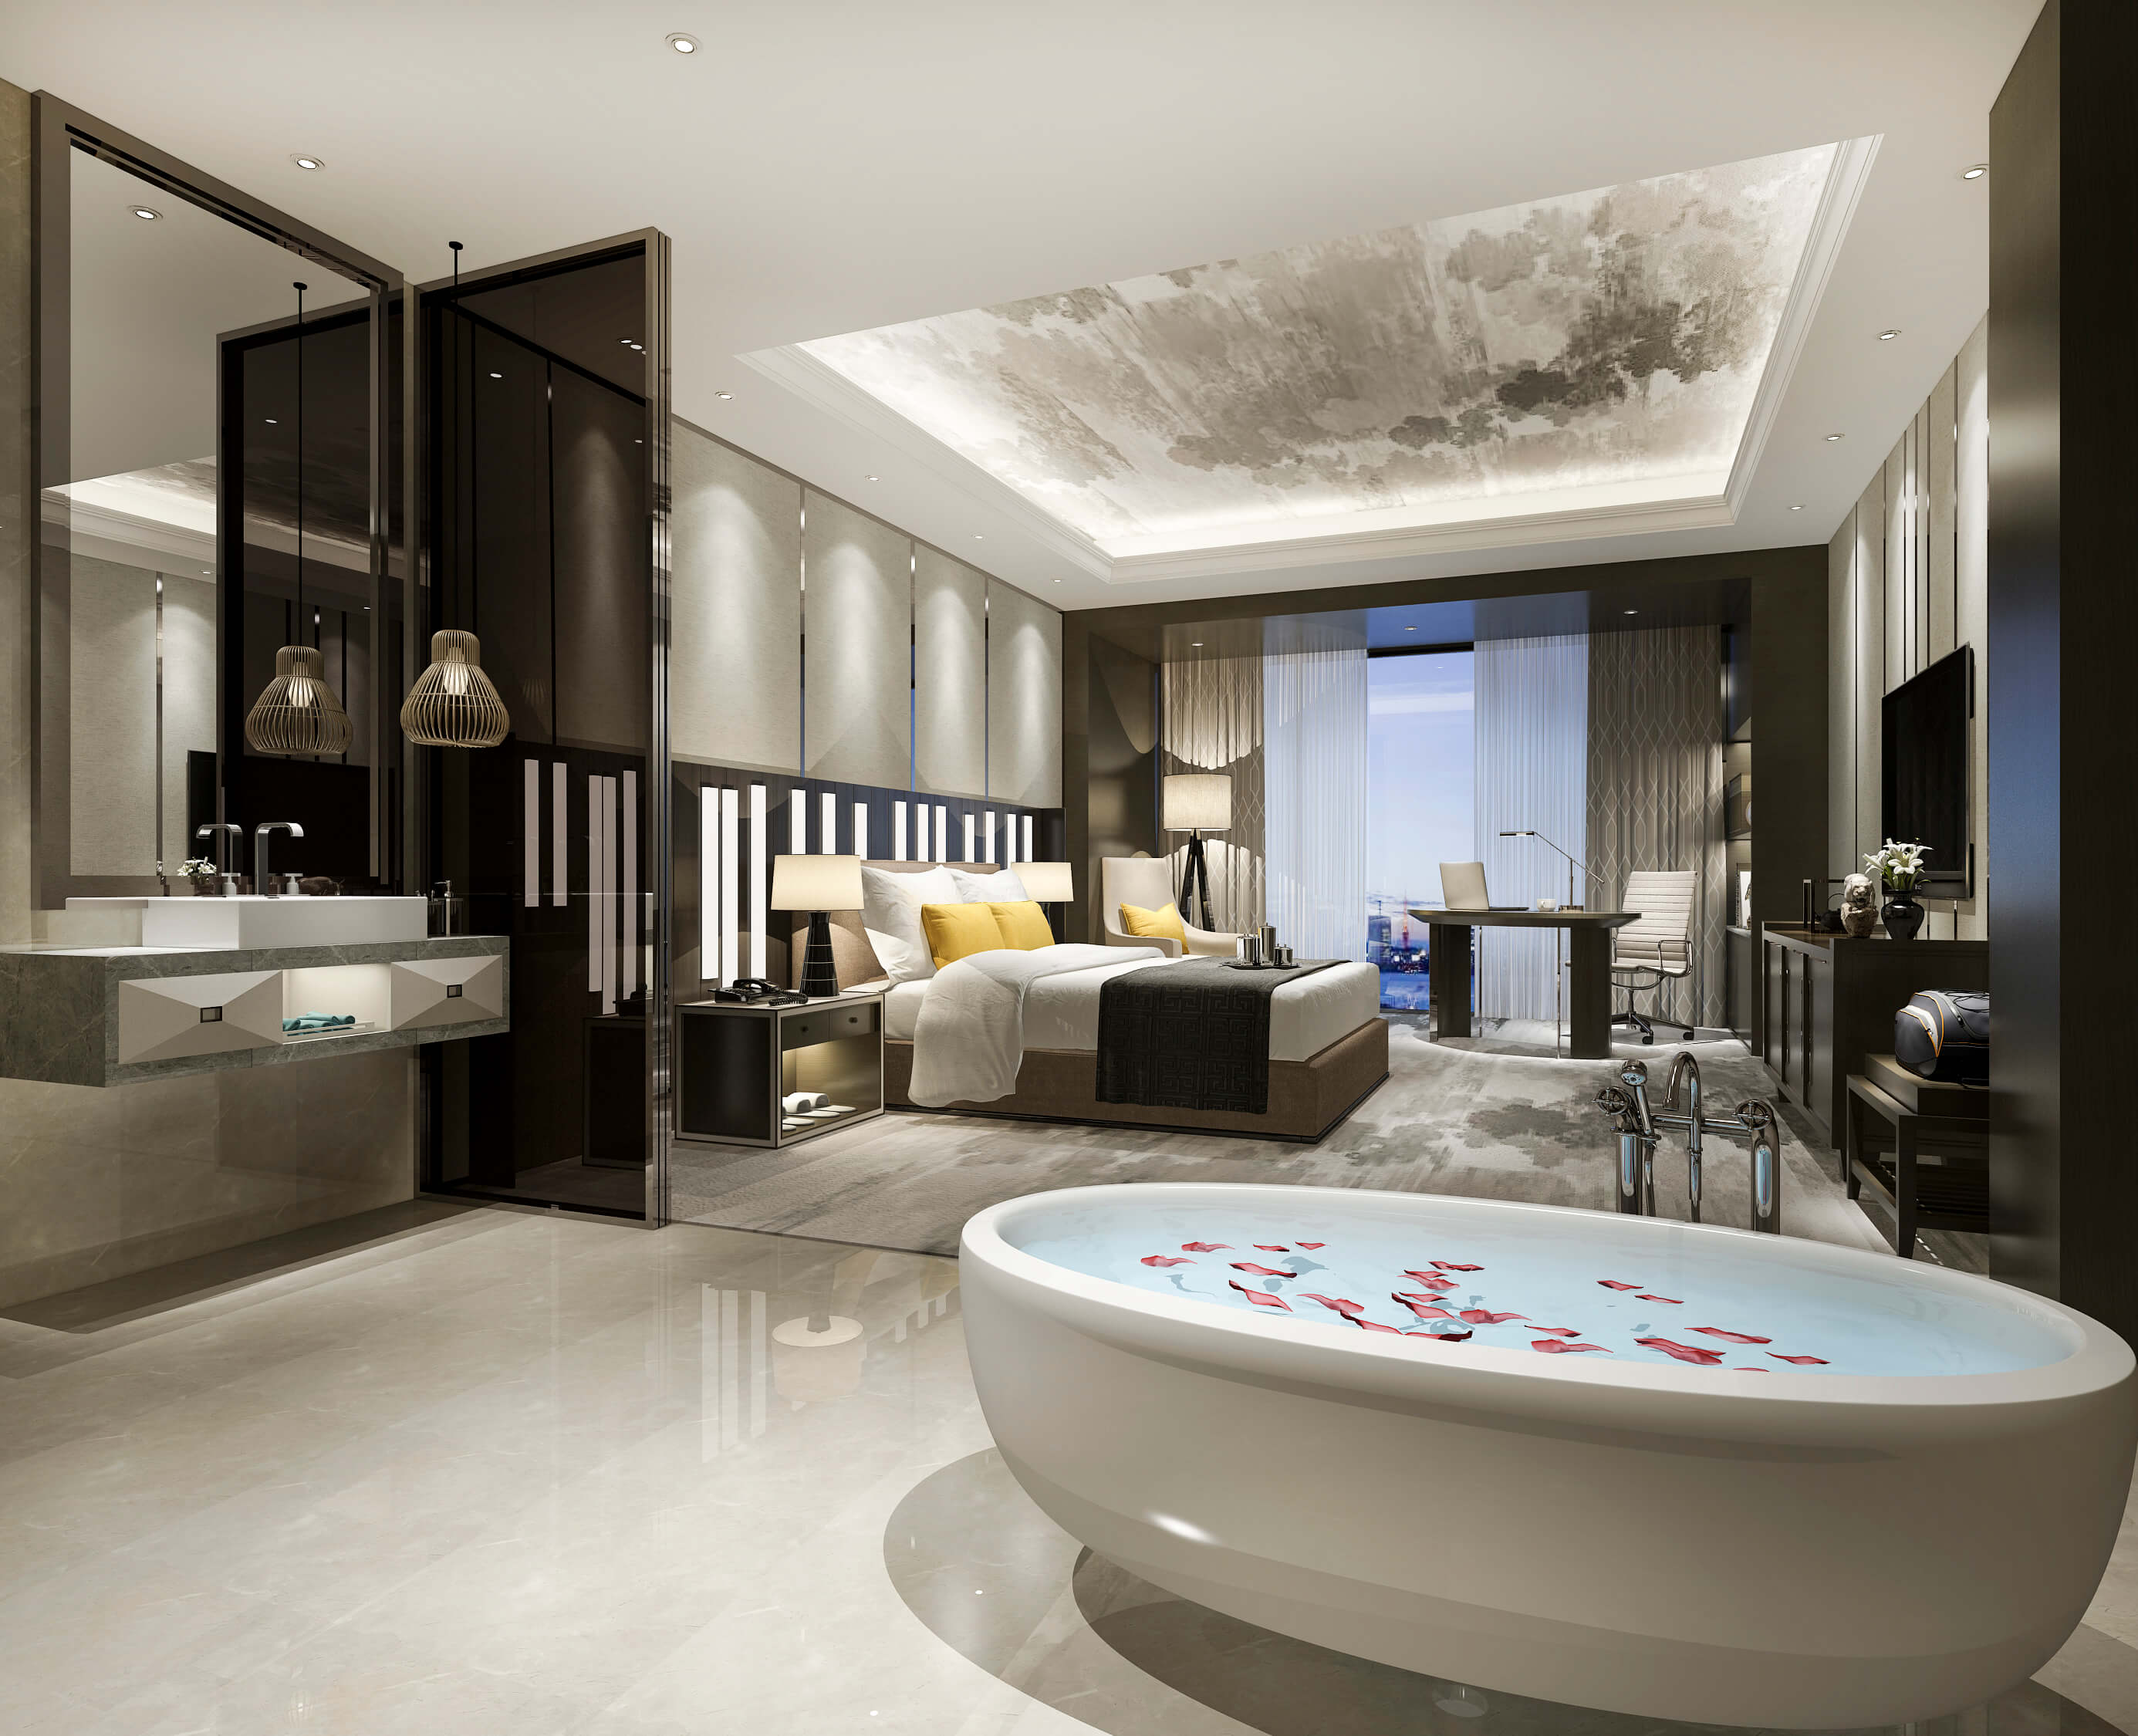 Luxury Bedroom with bath tub